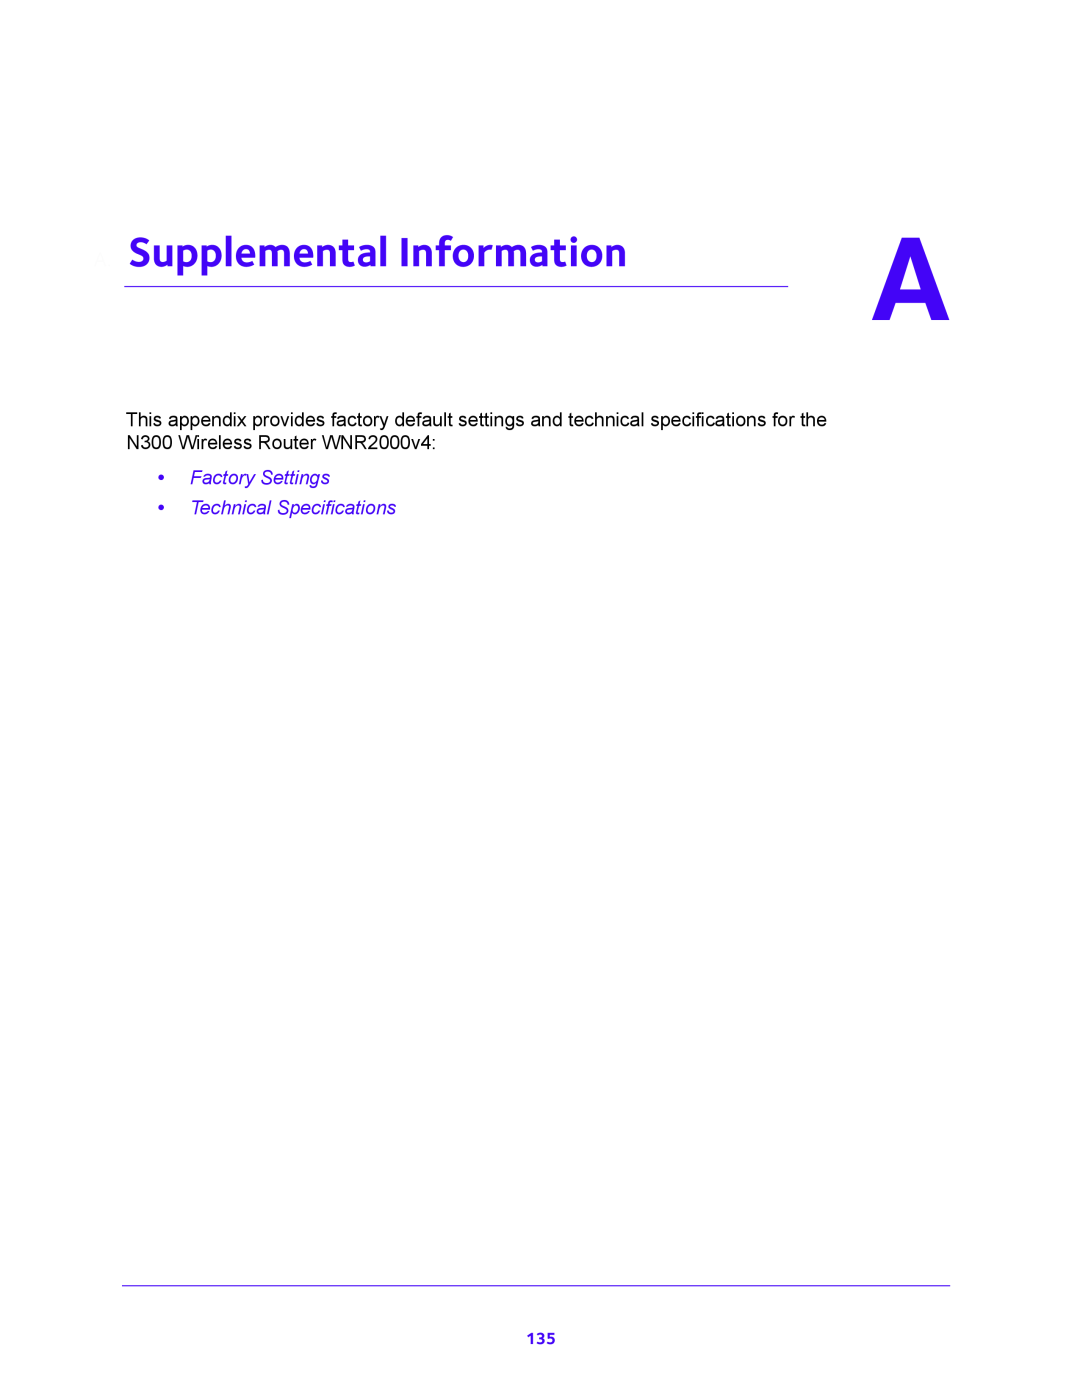 NETGEAR WNR200v4 user manual A. Supplemental Information, Factory Settings Technical Specifications 